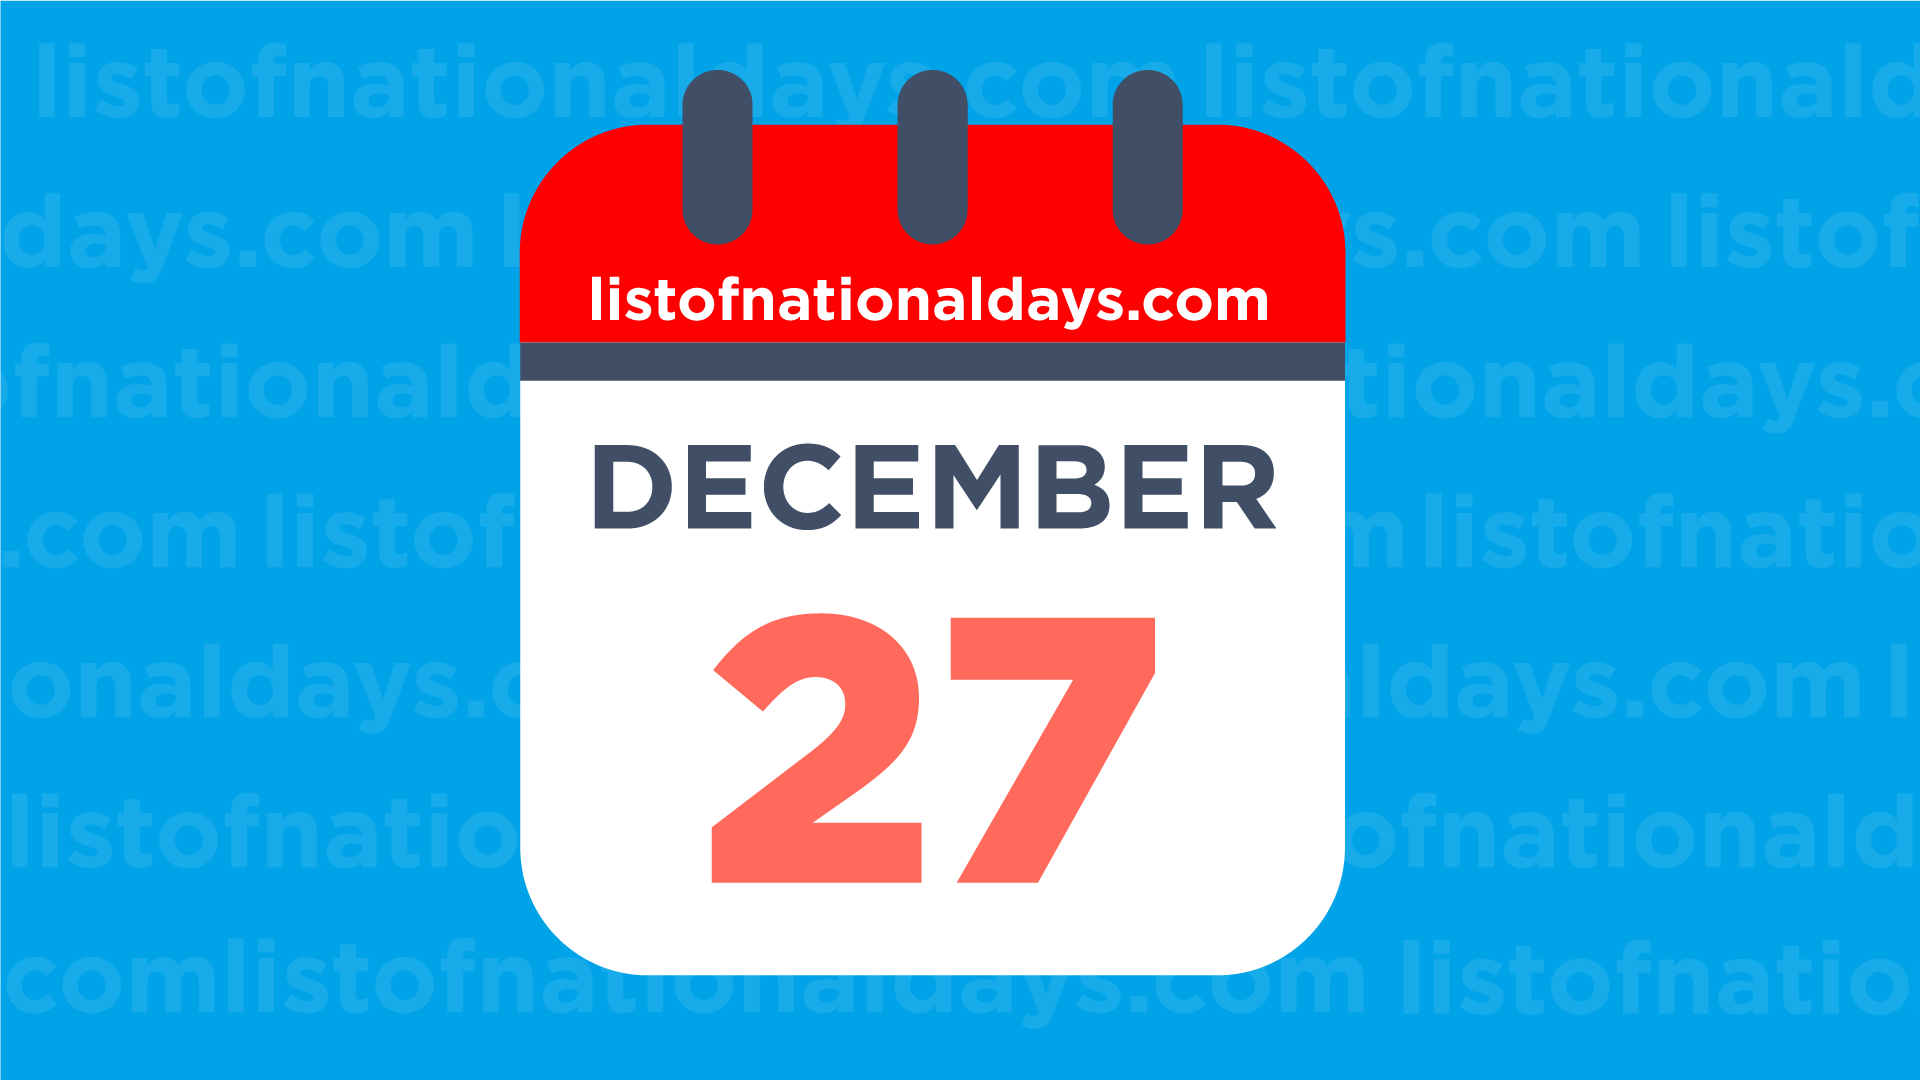 DECEMBER 27TH National Holidays,Observances & Famous Birthdays